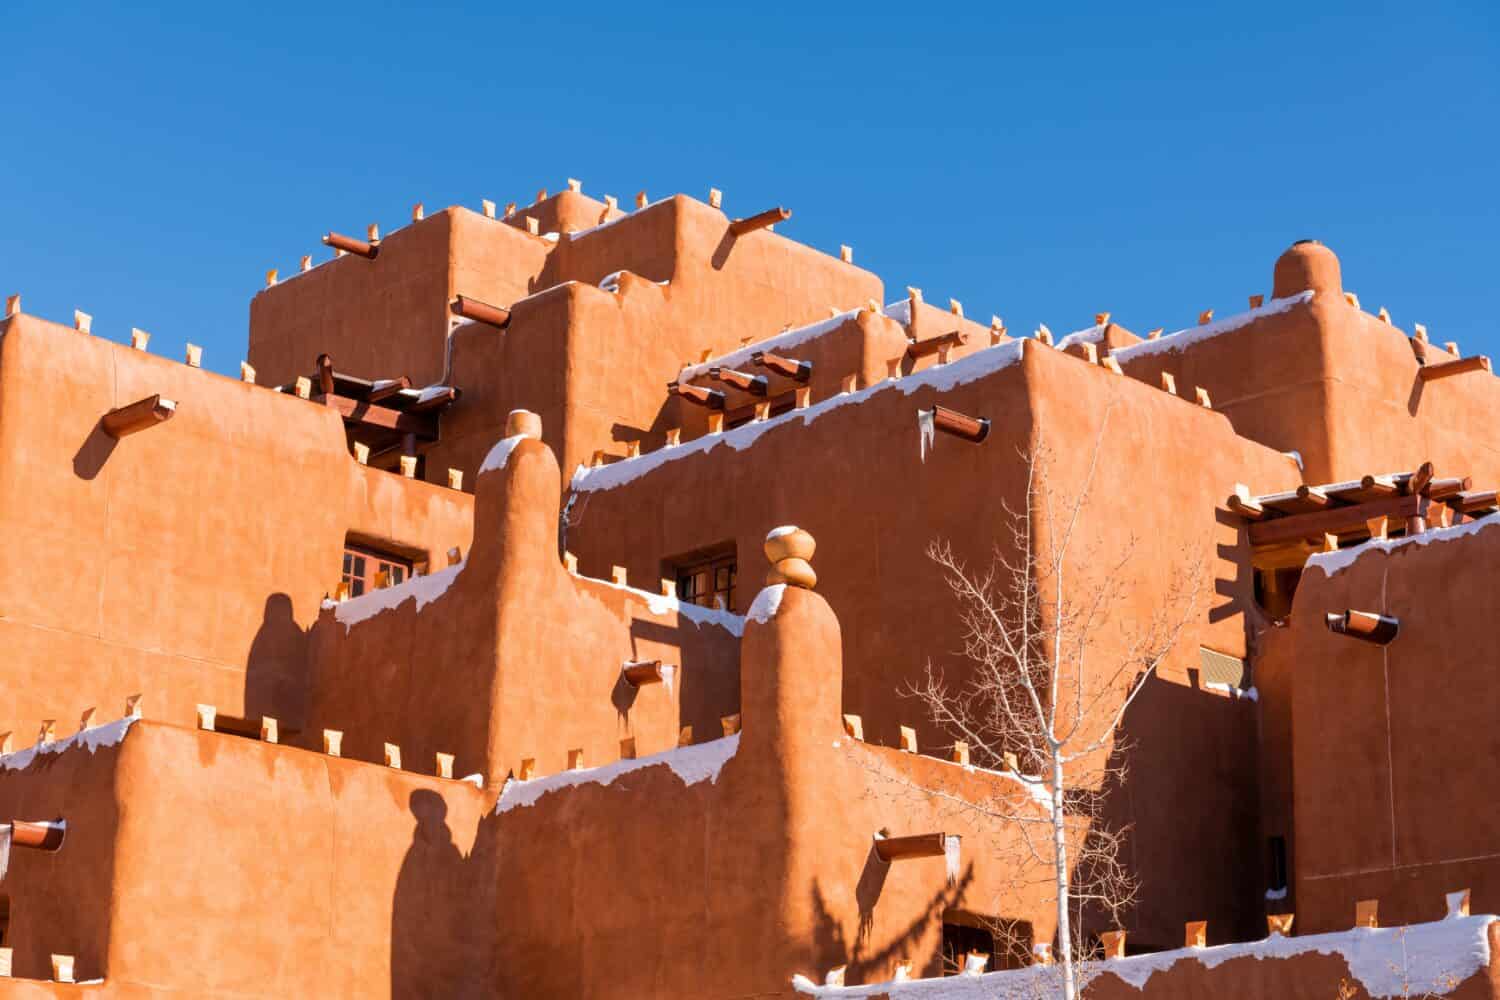 Winter scene of snow-covered adobe pueblo style building in Santa Fe, New Mexico